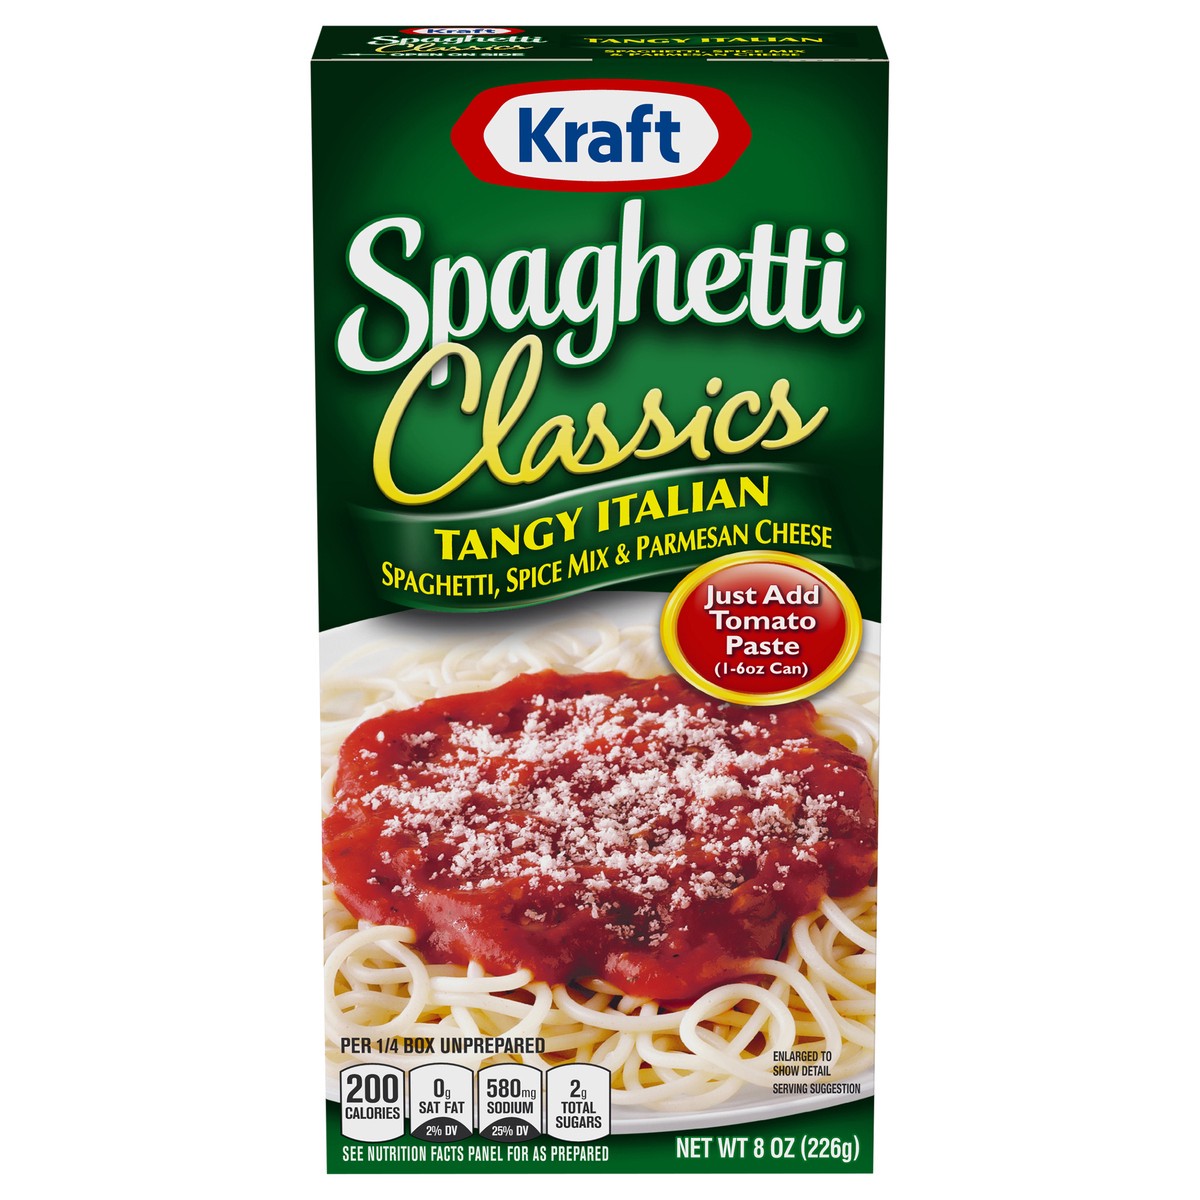 slide 4 of 14, Kraft Spaghetti Classics Tangy Italian Spaghetti, Spices, & Parmesean Cheese Meal Mix, 8 oz Box, 8 oz